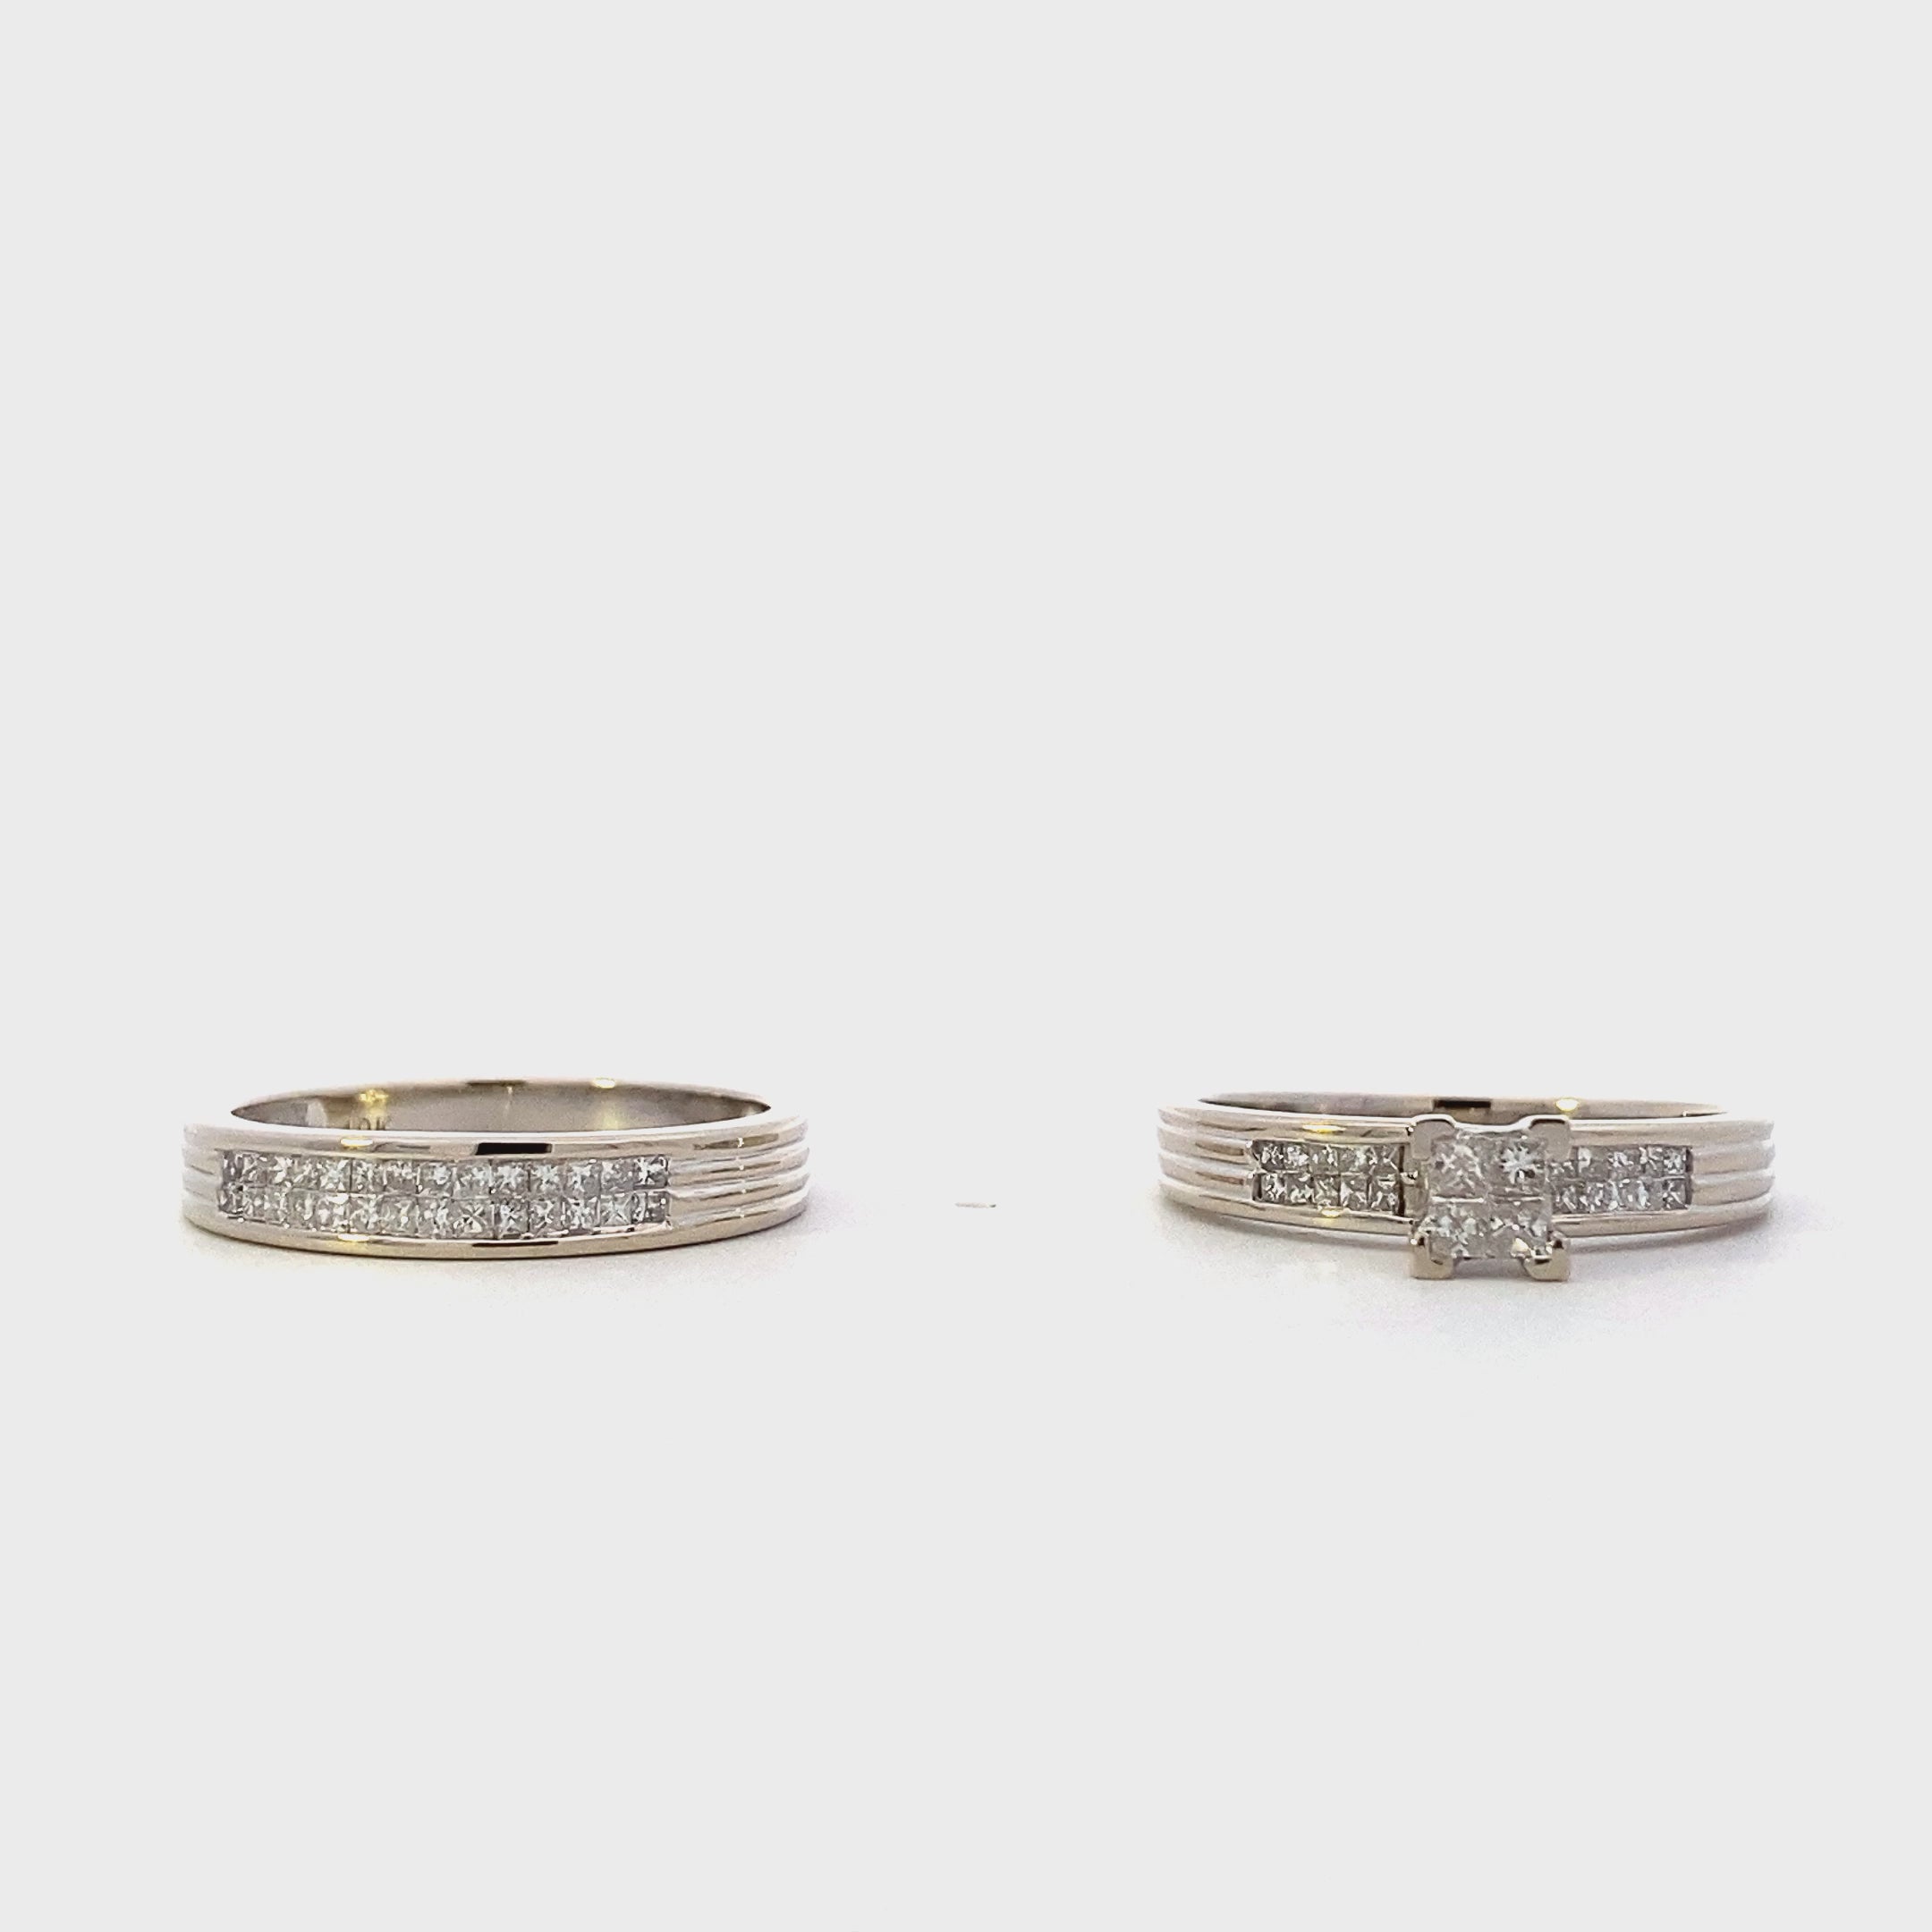 10K White Gold Diamond Engagement & Wedding Ring Set - 0.39ct